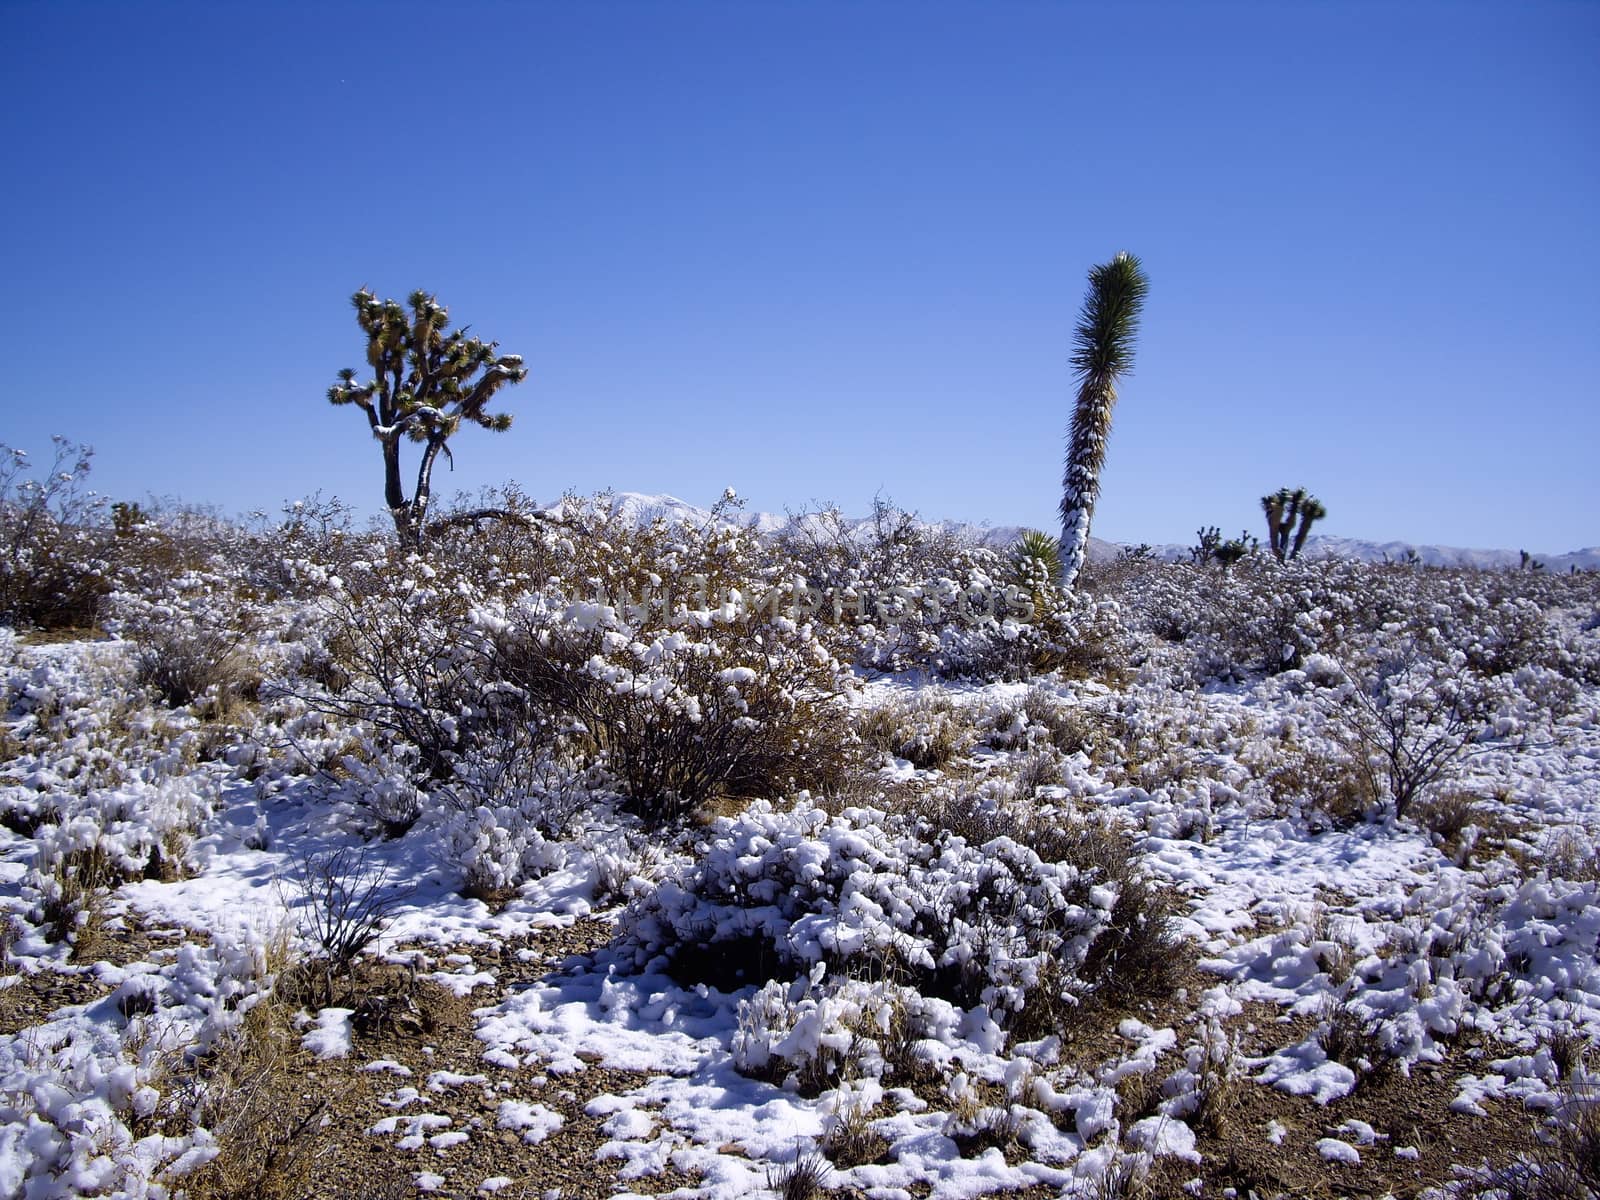 Winter in the desert by emattil